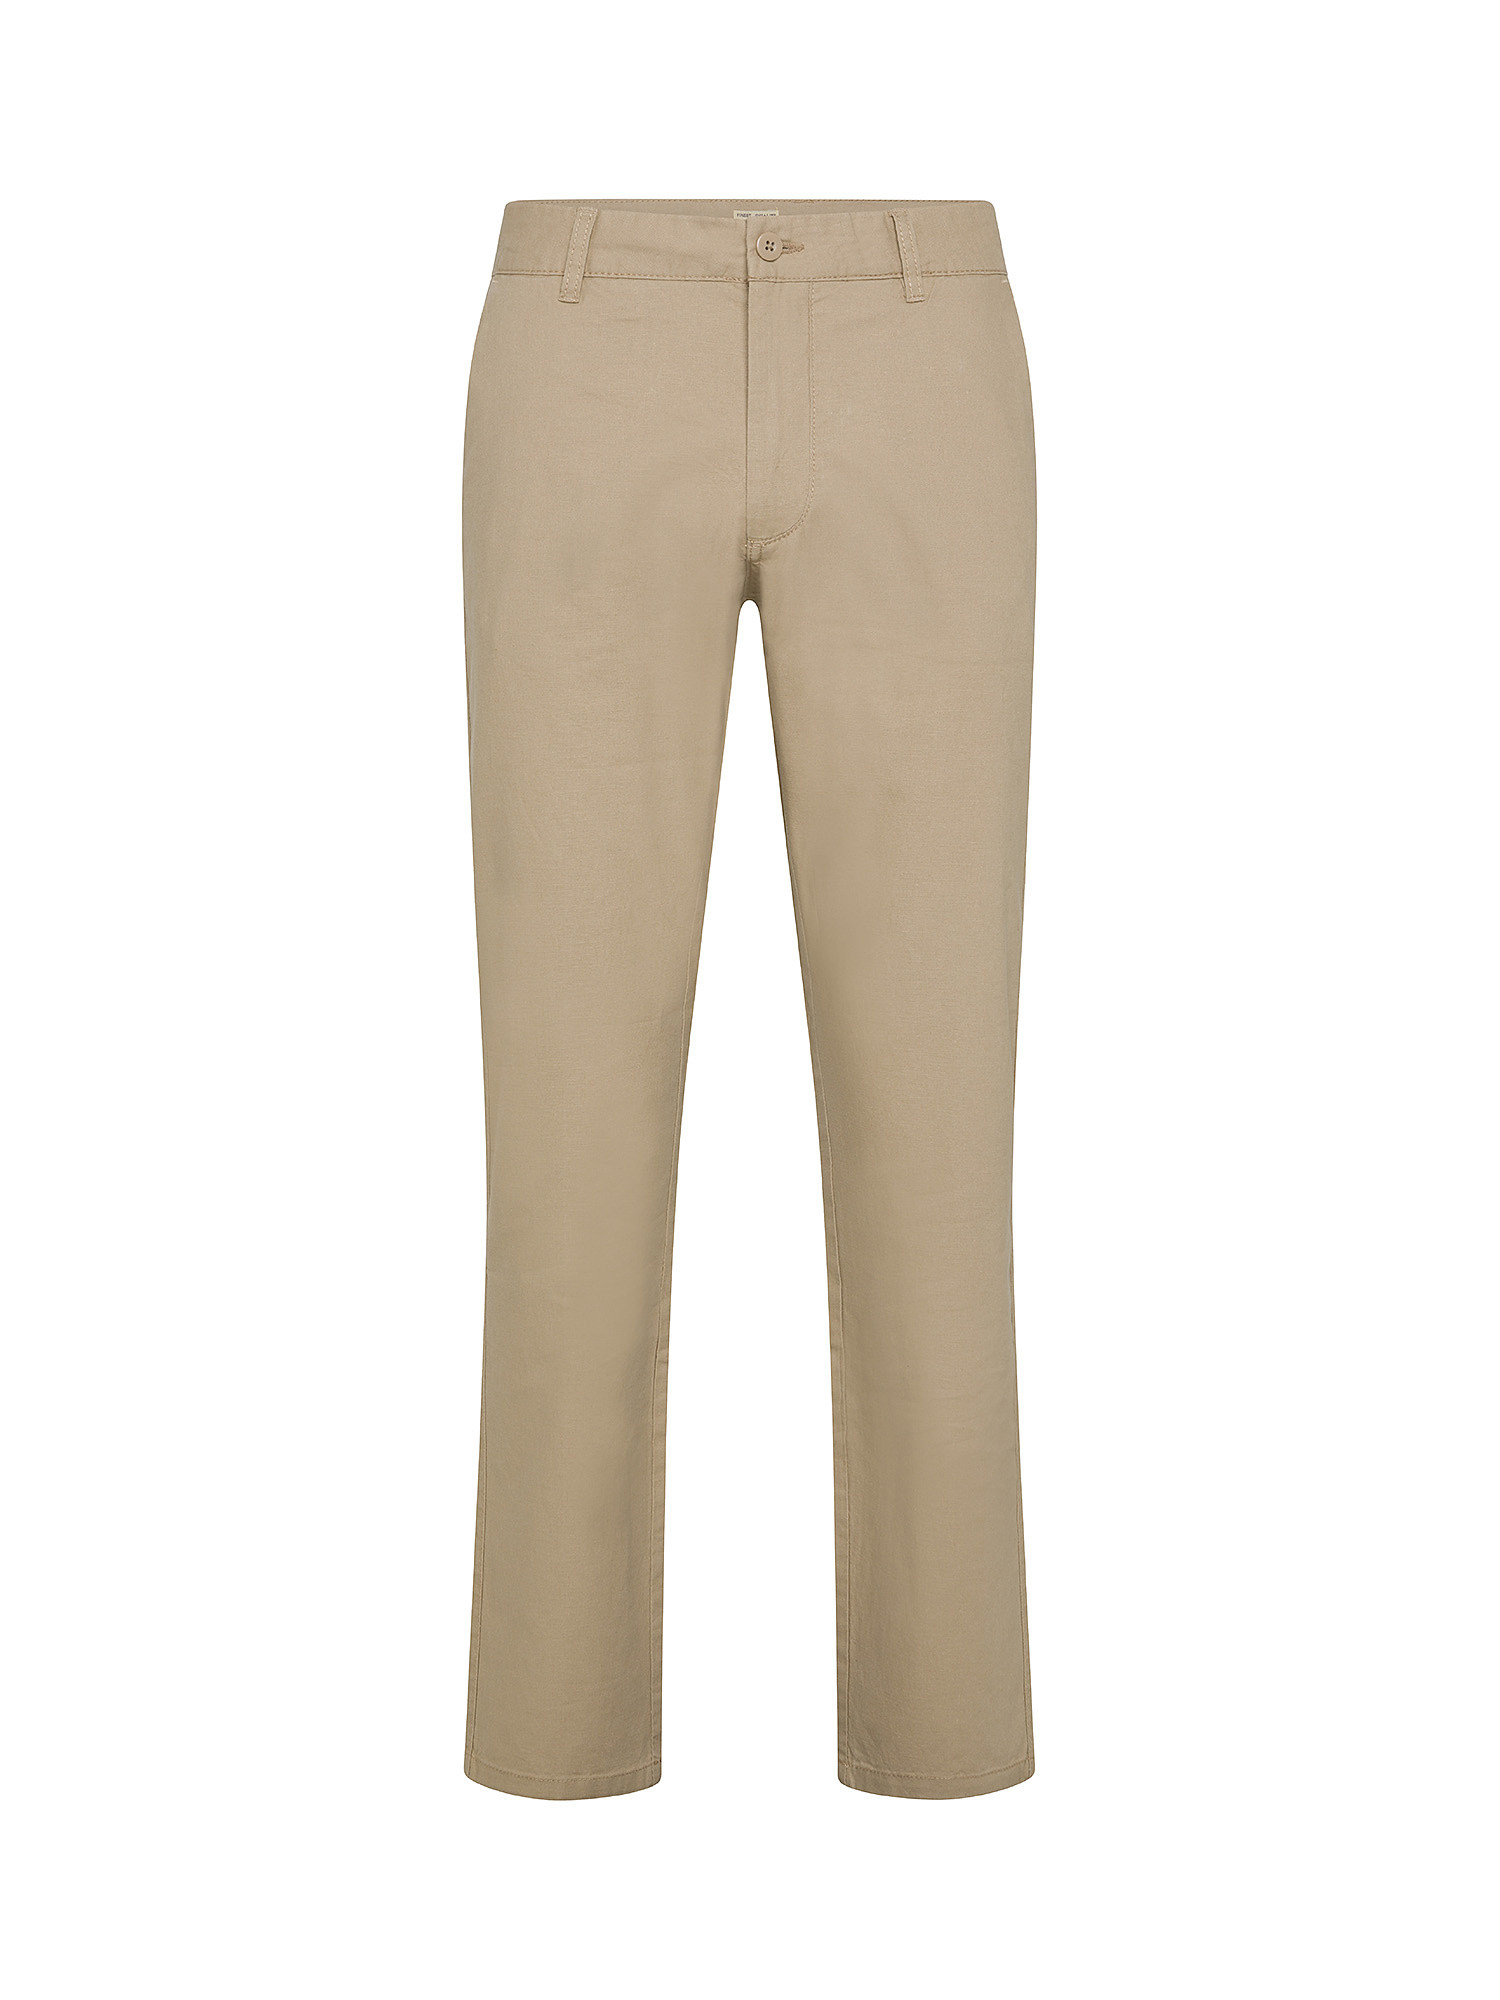 JCT - Pantaloni chino in misto lino, Beige scuro, large image number 0